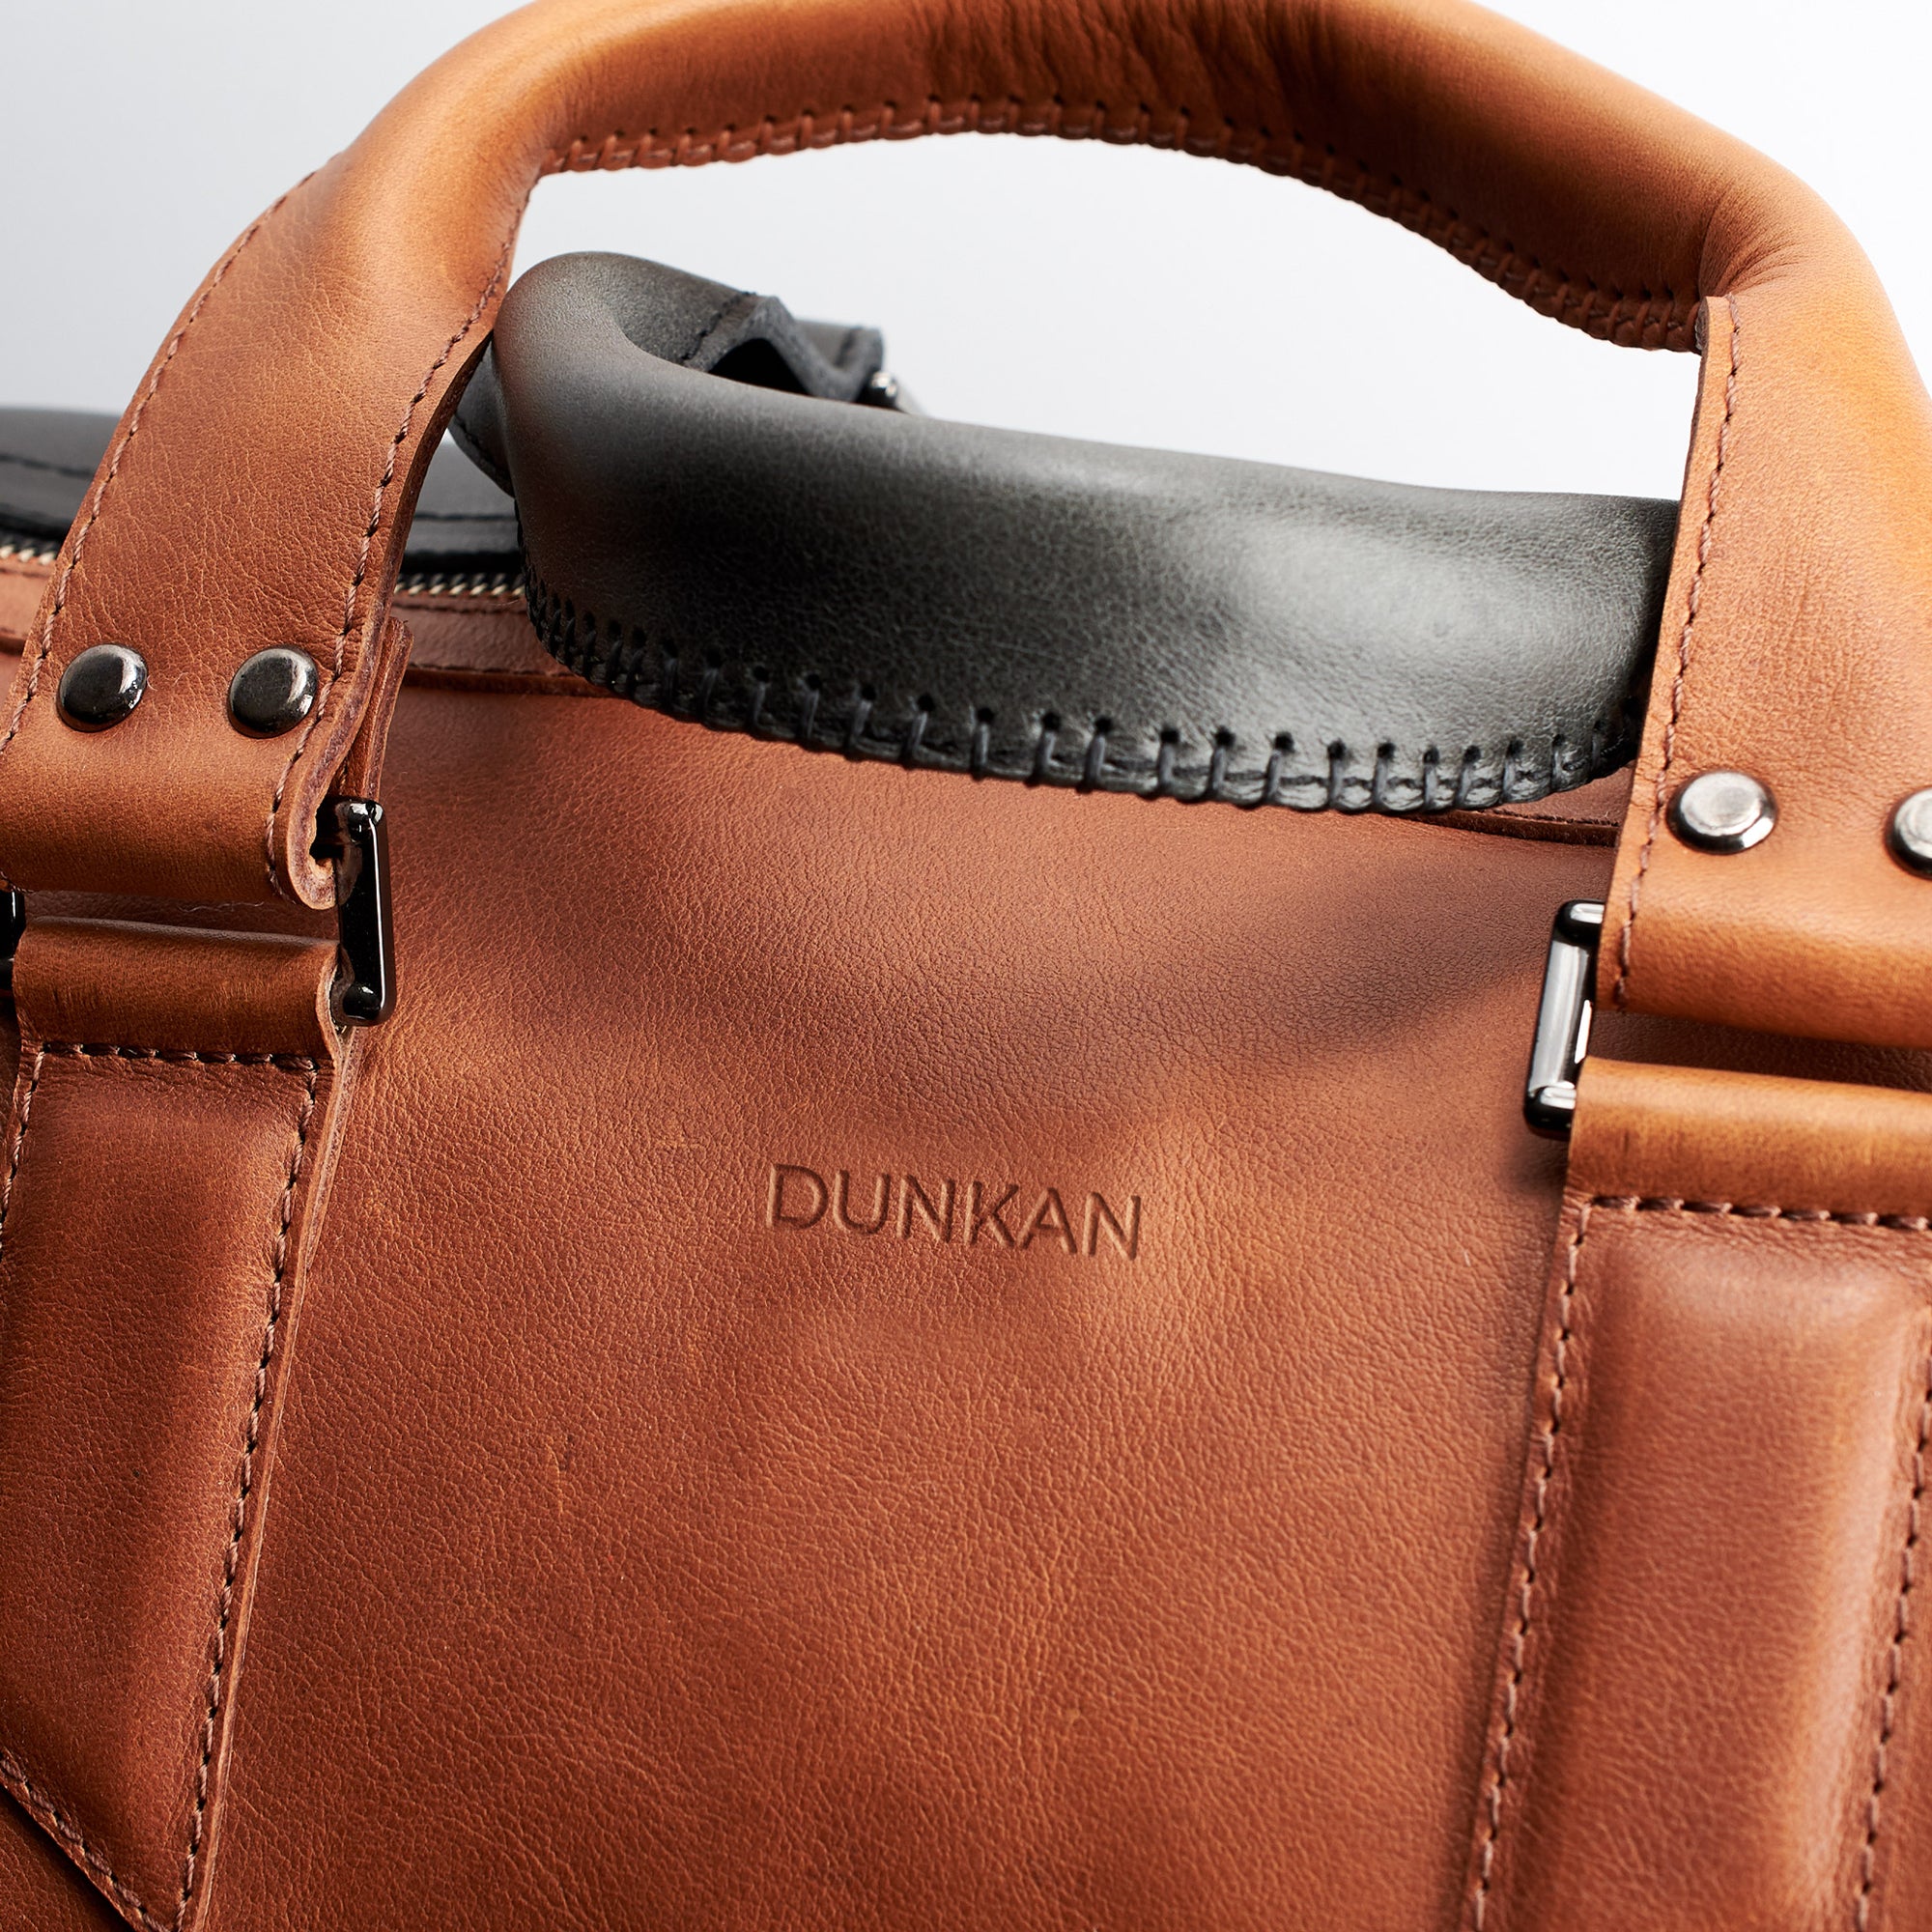 Custom monogram. Double color men's duffle bag. Limited edition designer product. Unique weekender for travel. 